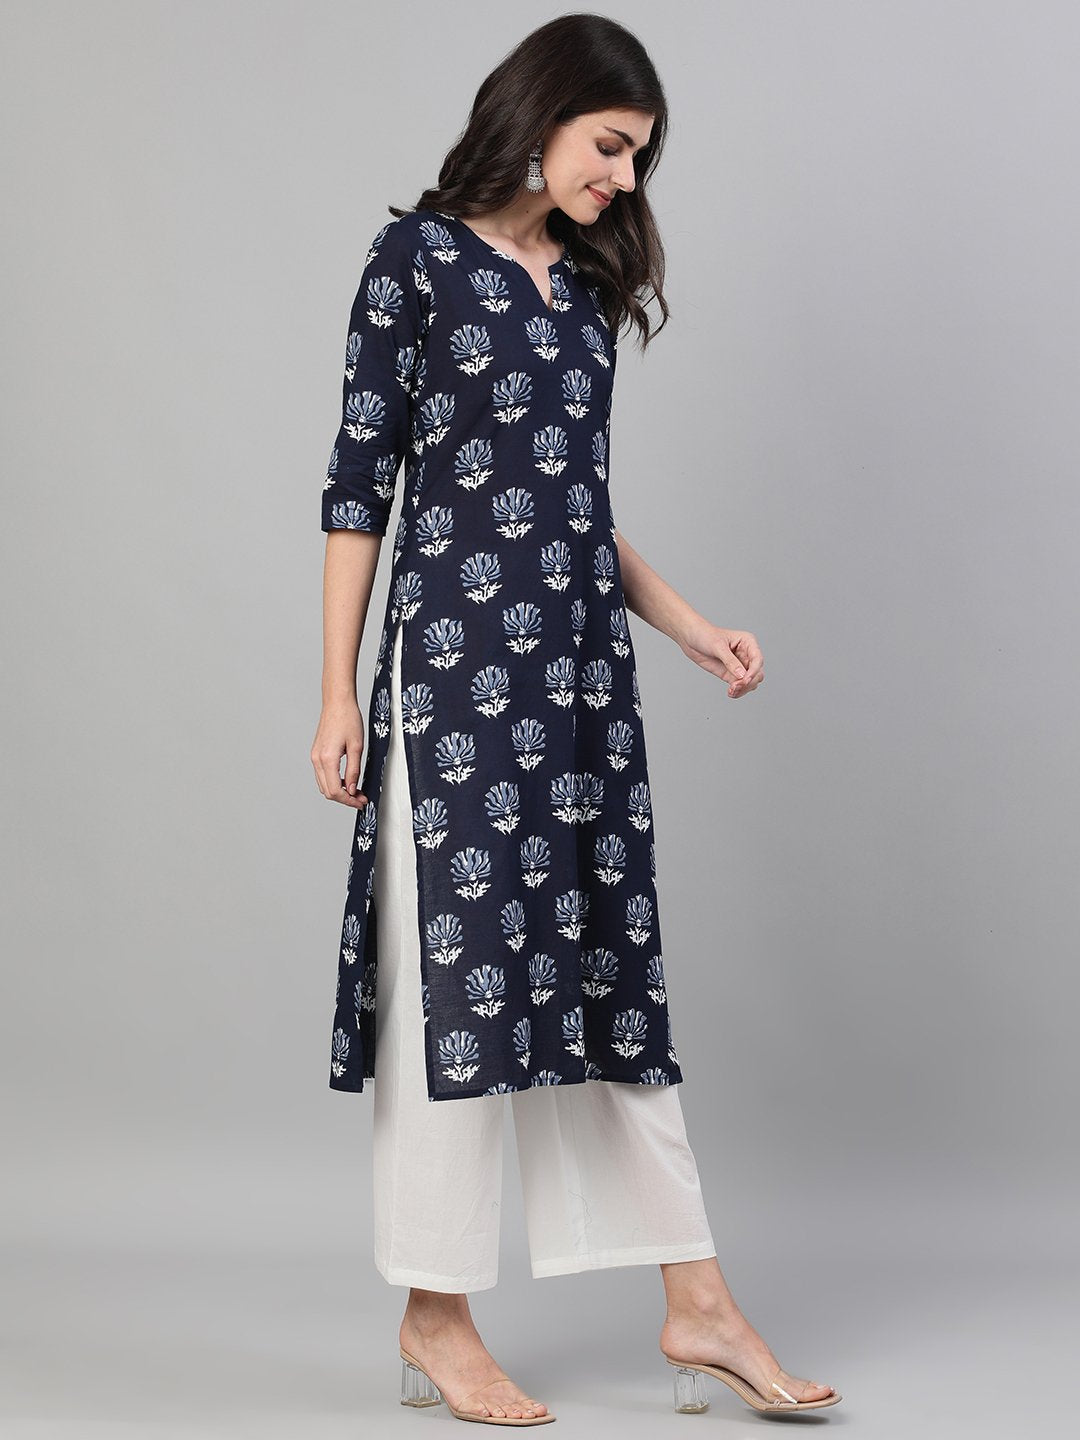 Women's Indigo Calf Length Three-Quarter Sleeves Straight Floral Printed Cotton Kurta With Pockets And Face Mask - Nayo Clothing